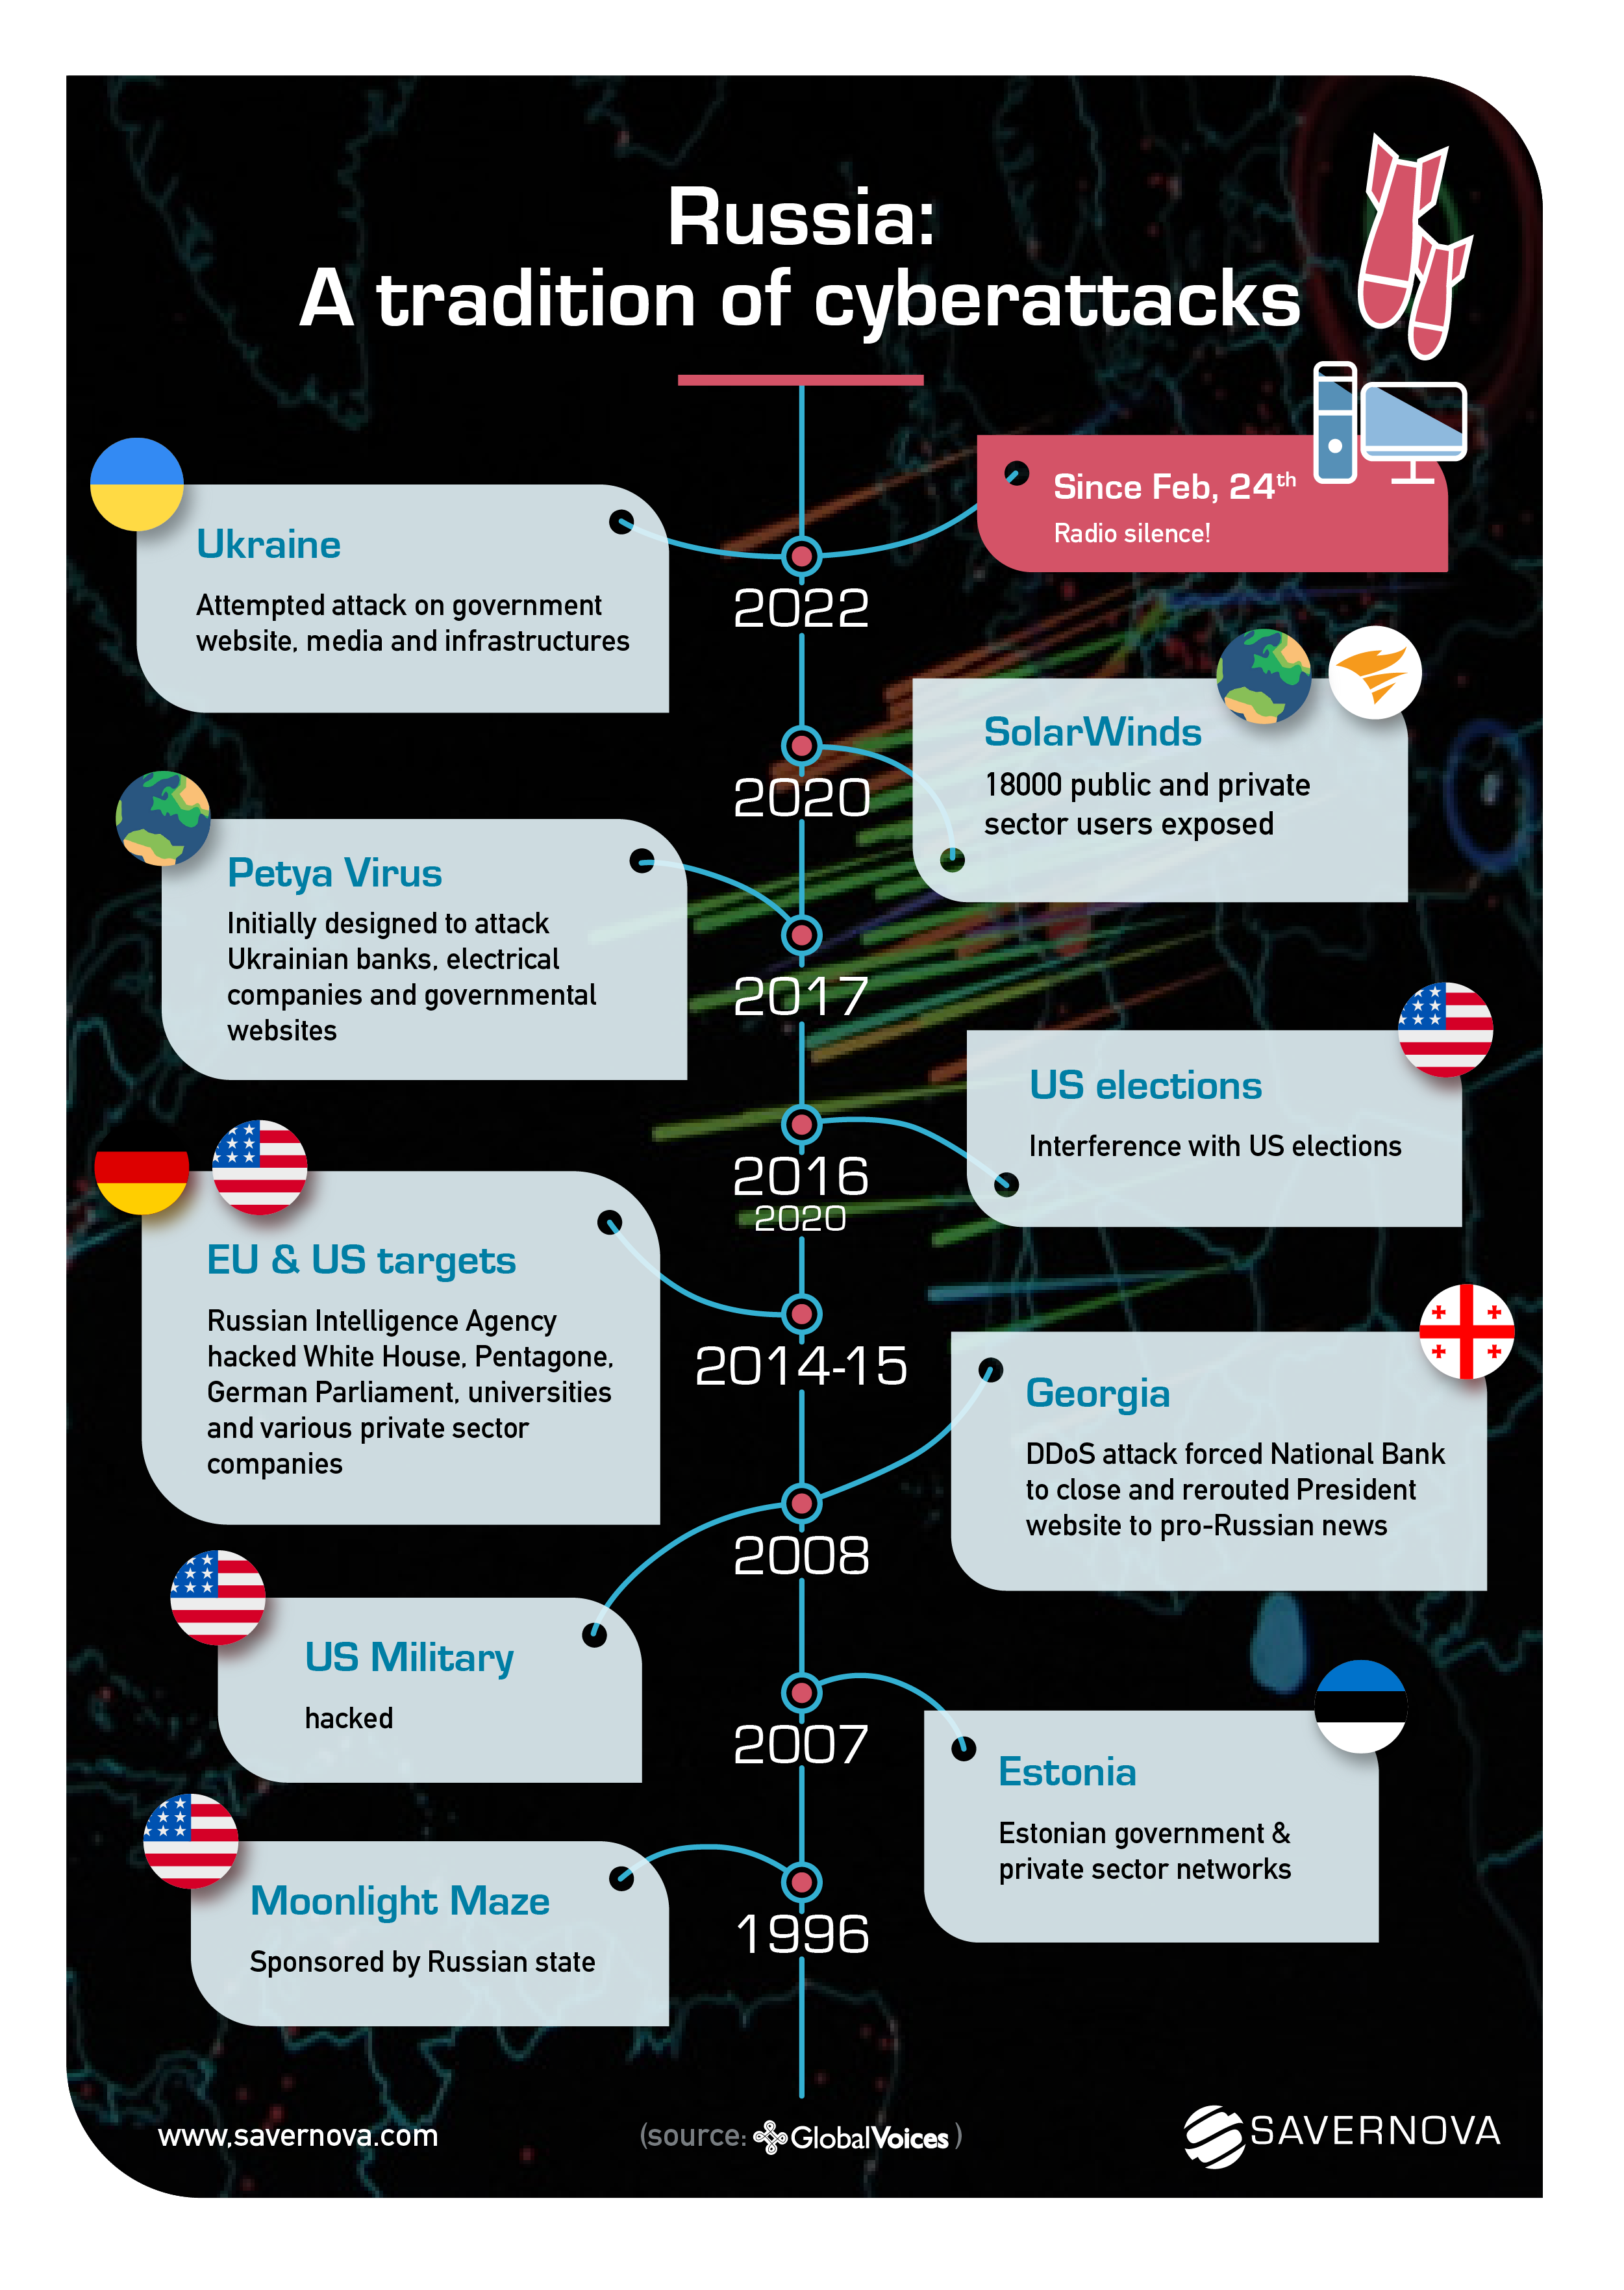 Infographics: Russian tradition of cyberattacks for cyberwarfare